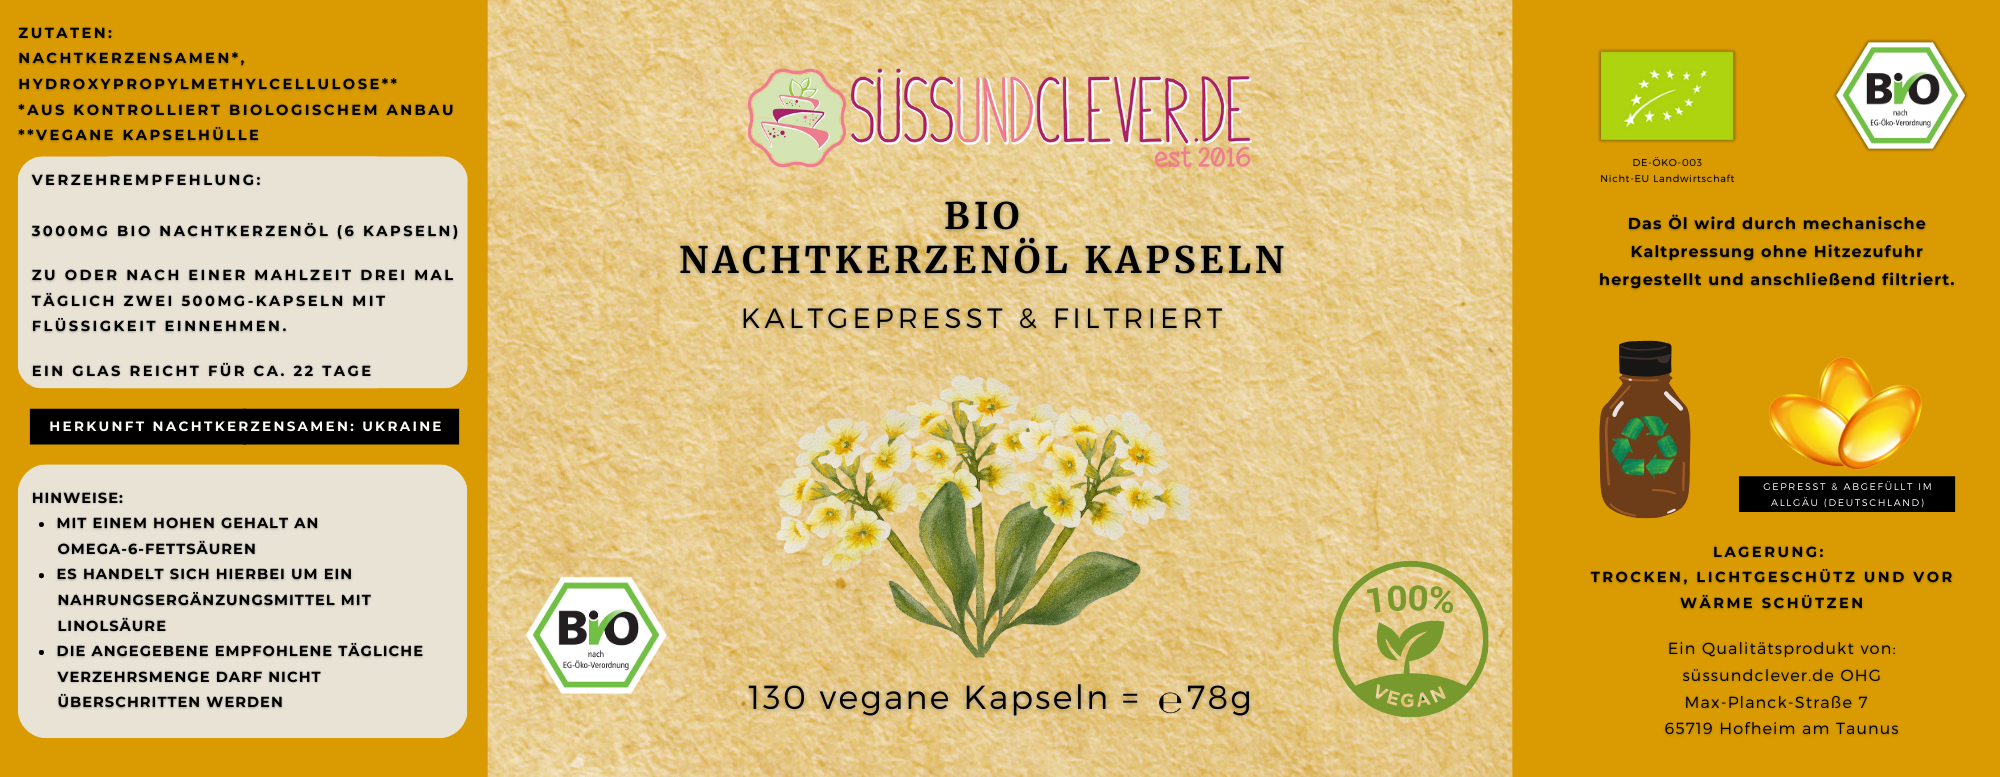 Bio Nachtkerzenöl Kapseln | kaltgepresst | vegan | 130 vegane Kapseln